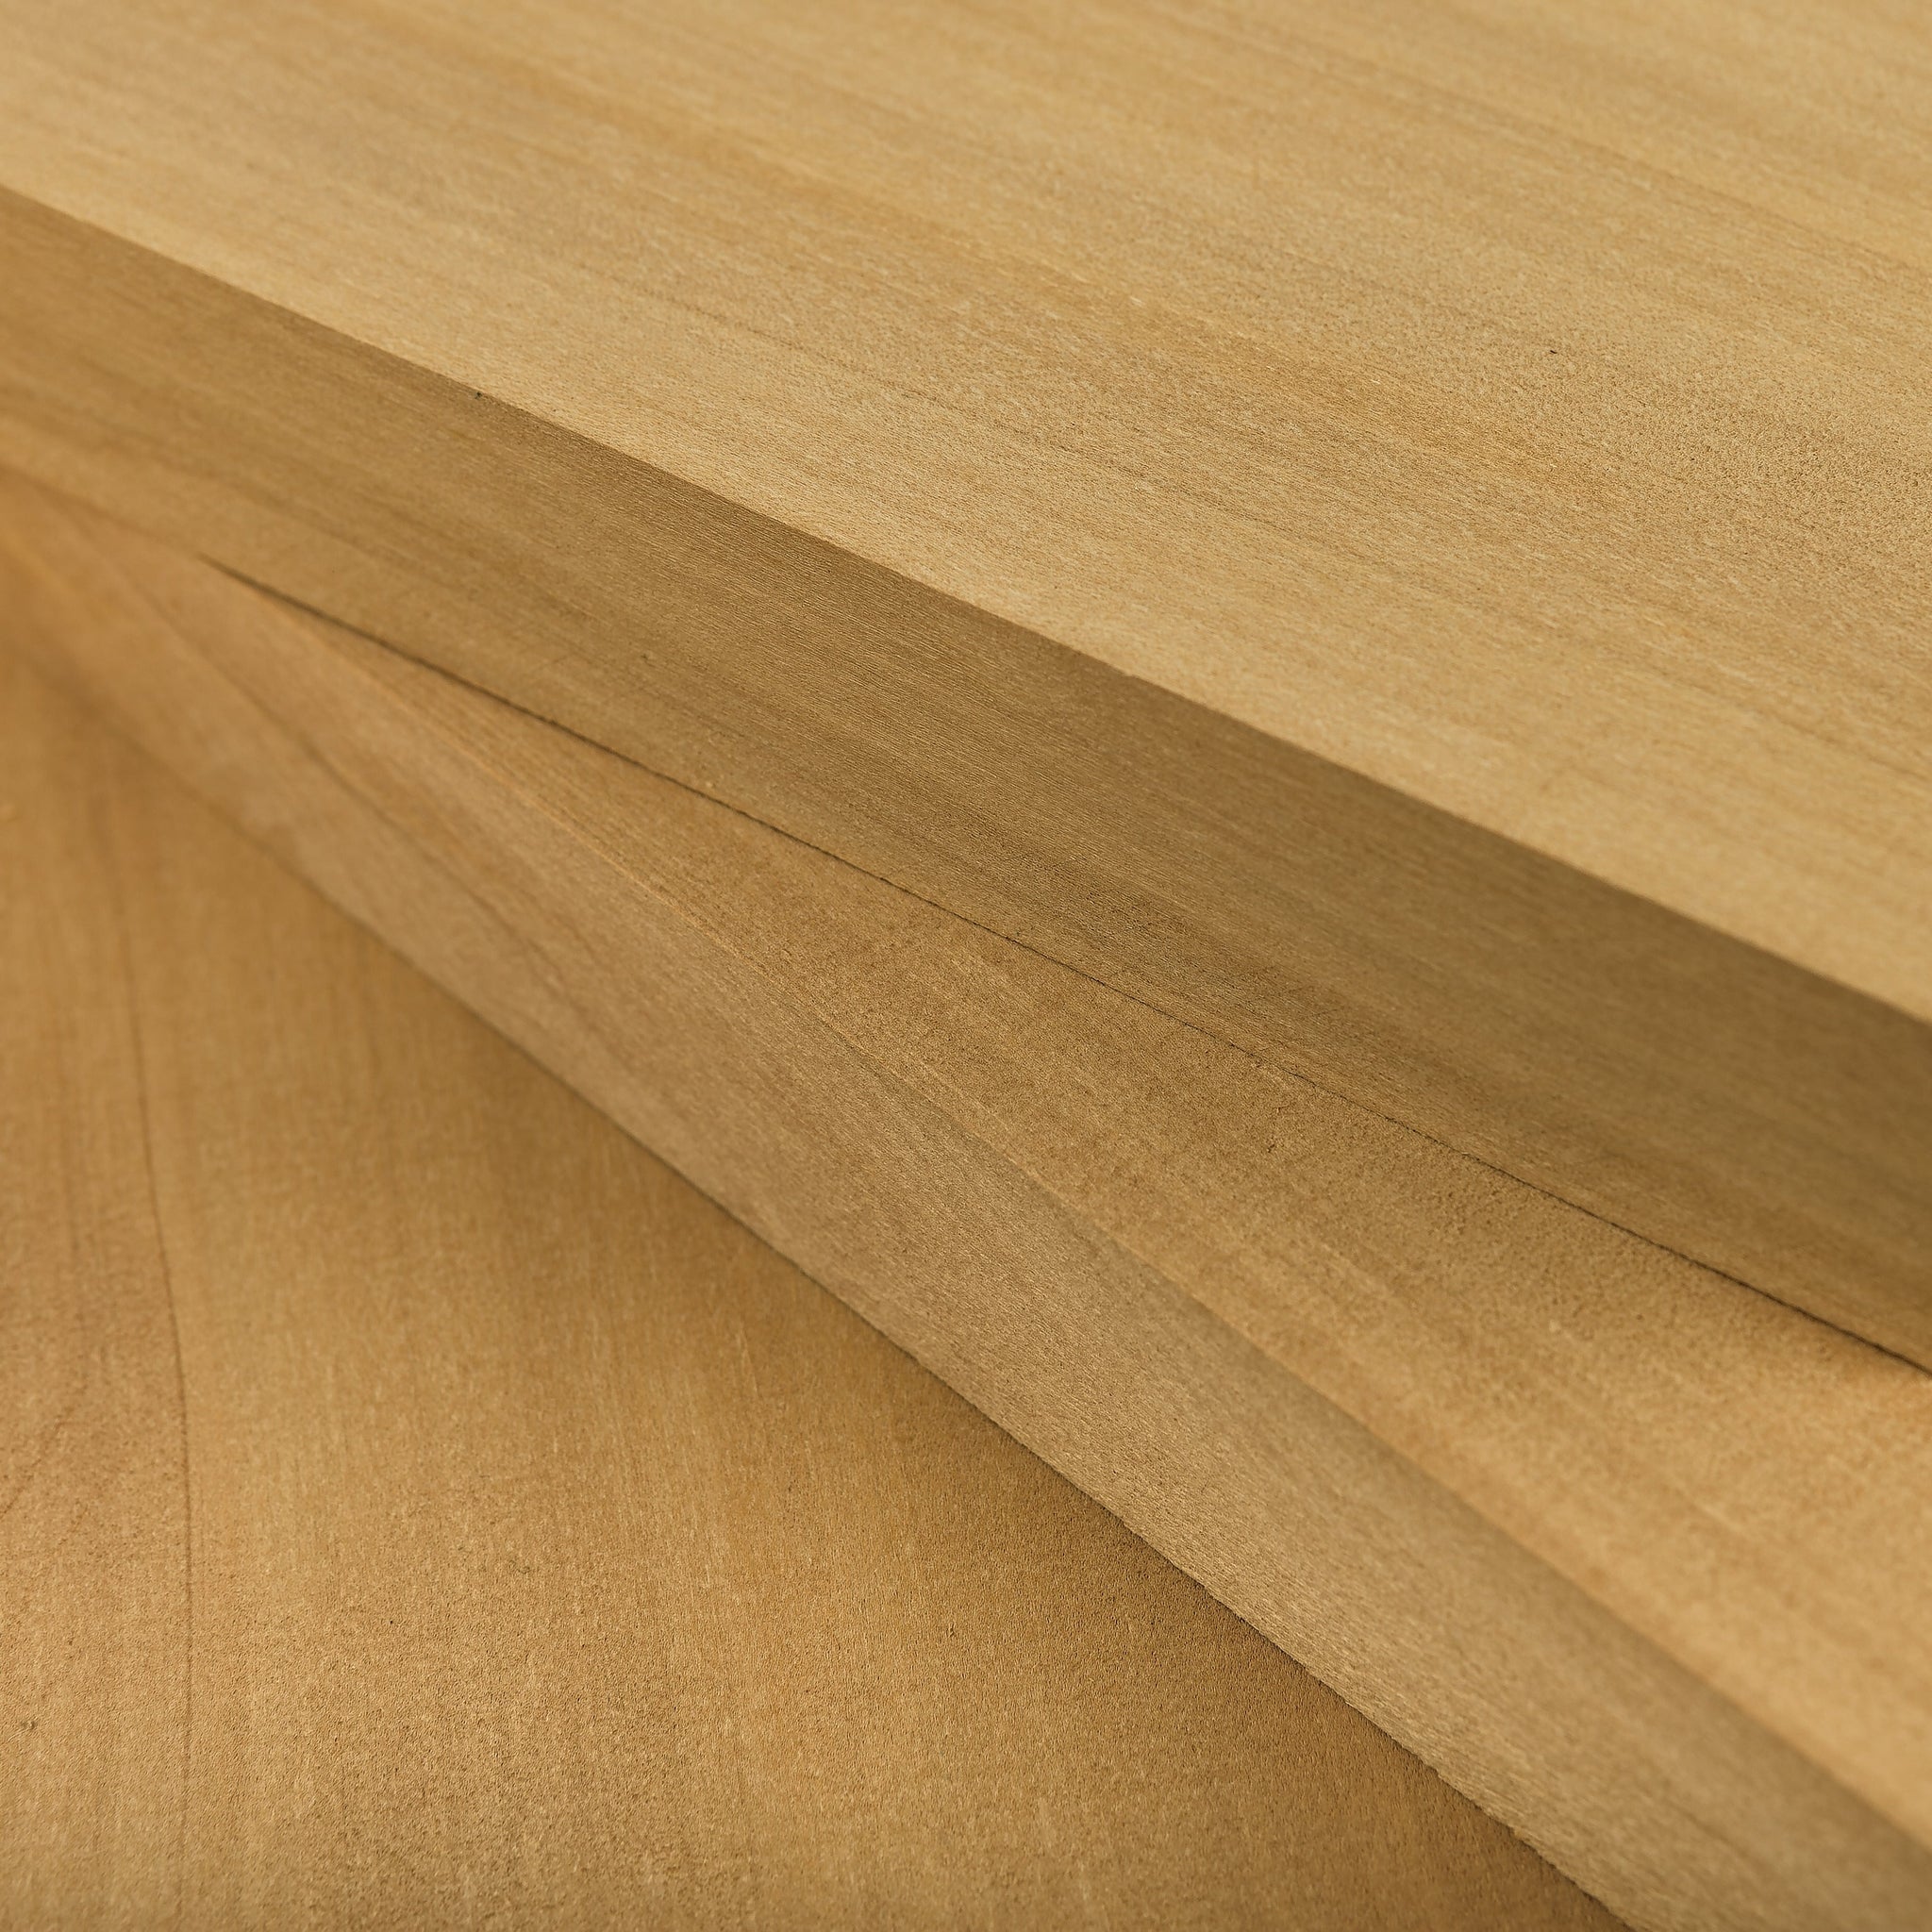 Abura wood plank